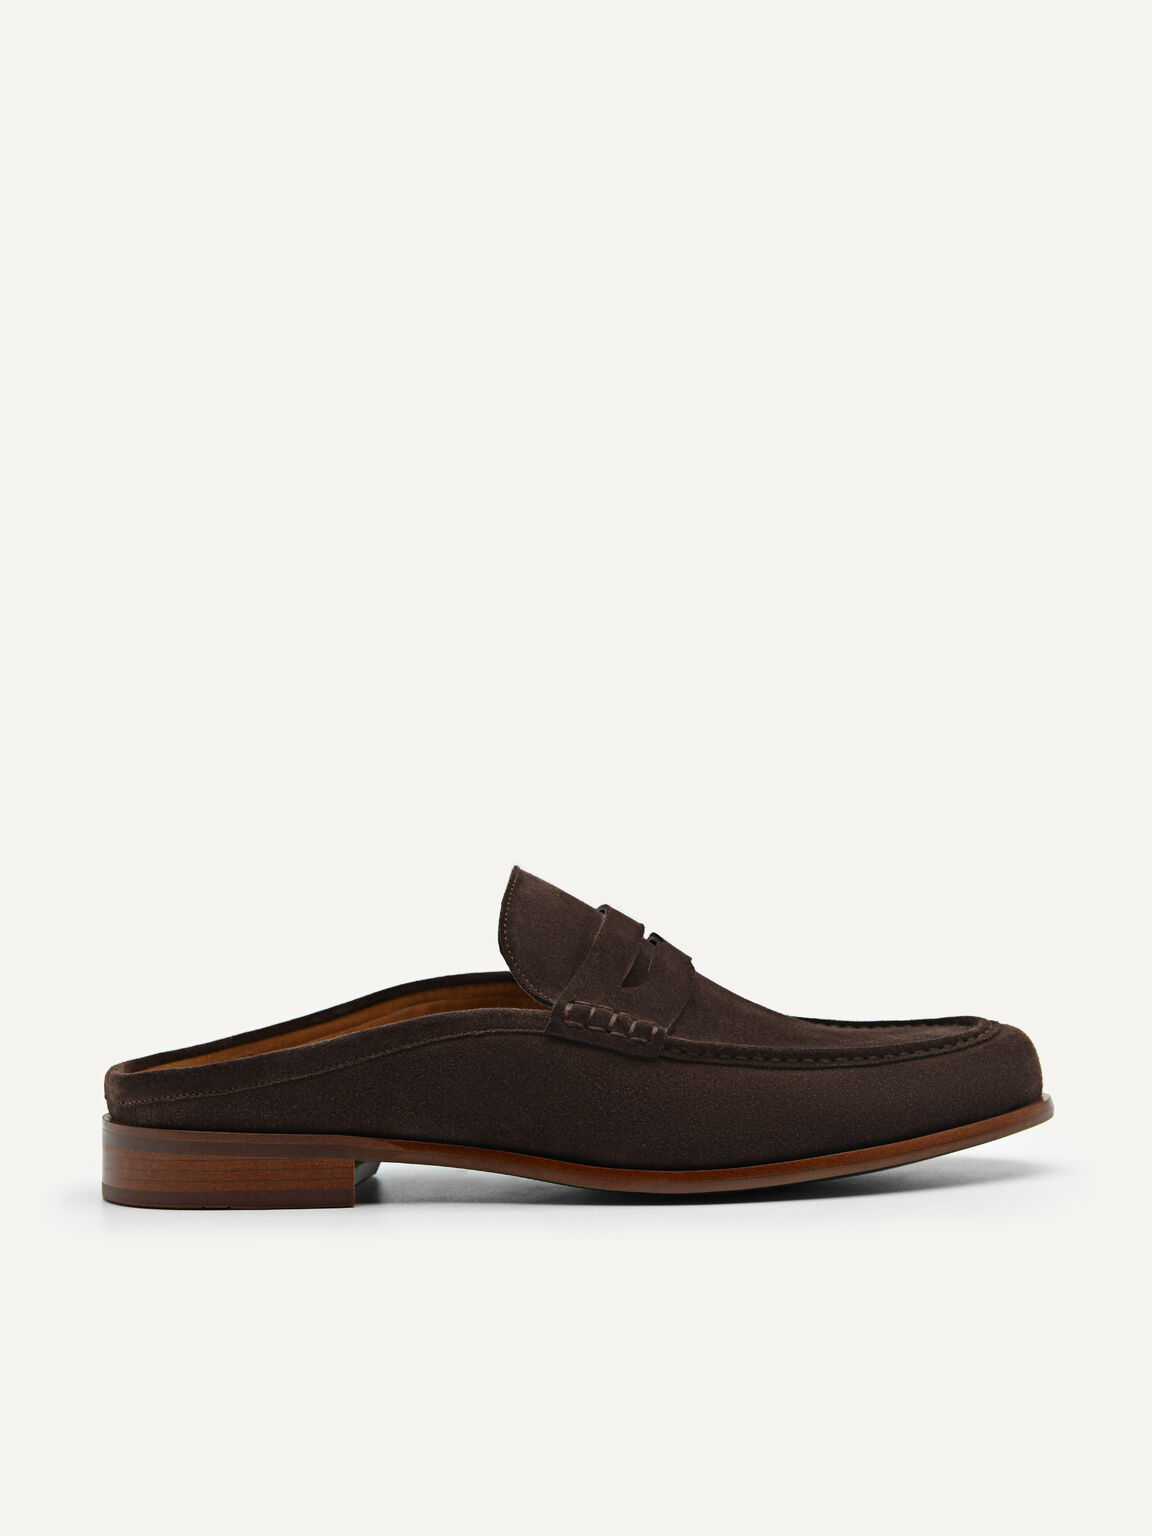 Blake Leather Slip-On Loafers, Dark Brown